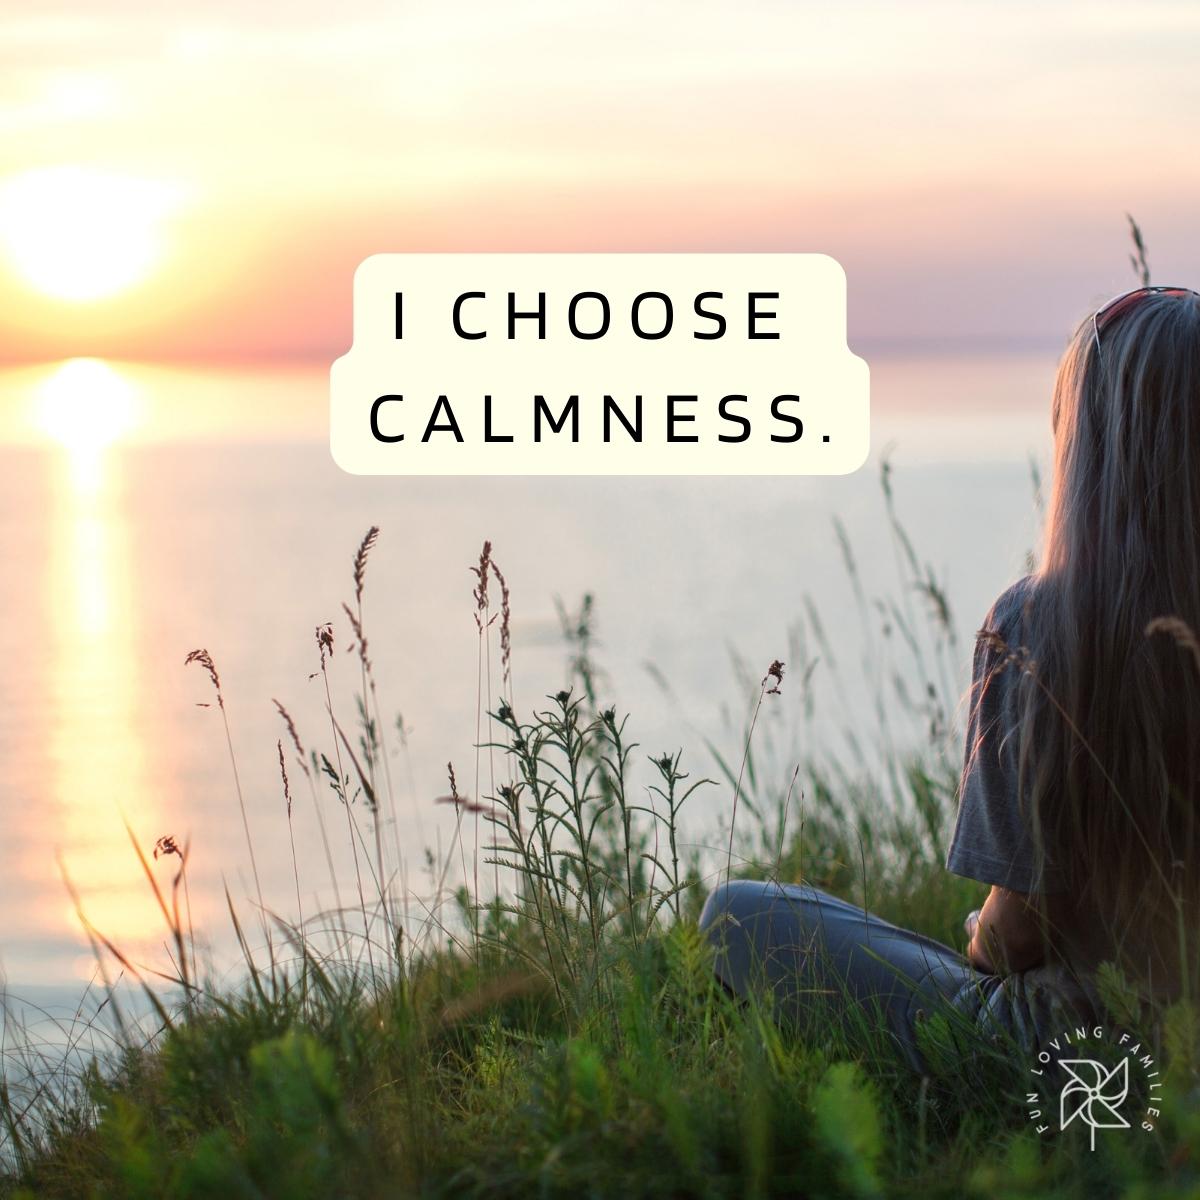 I choose calmness affirmation